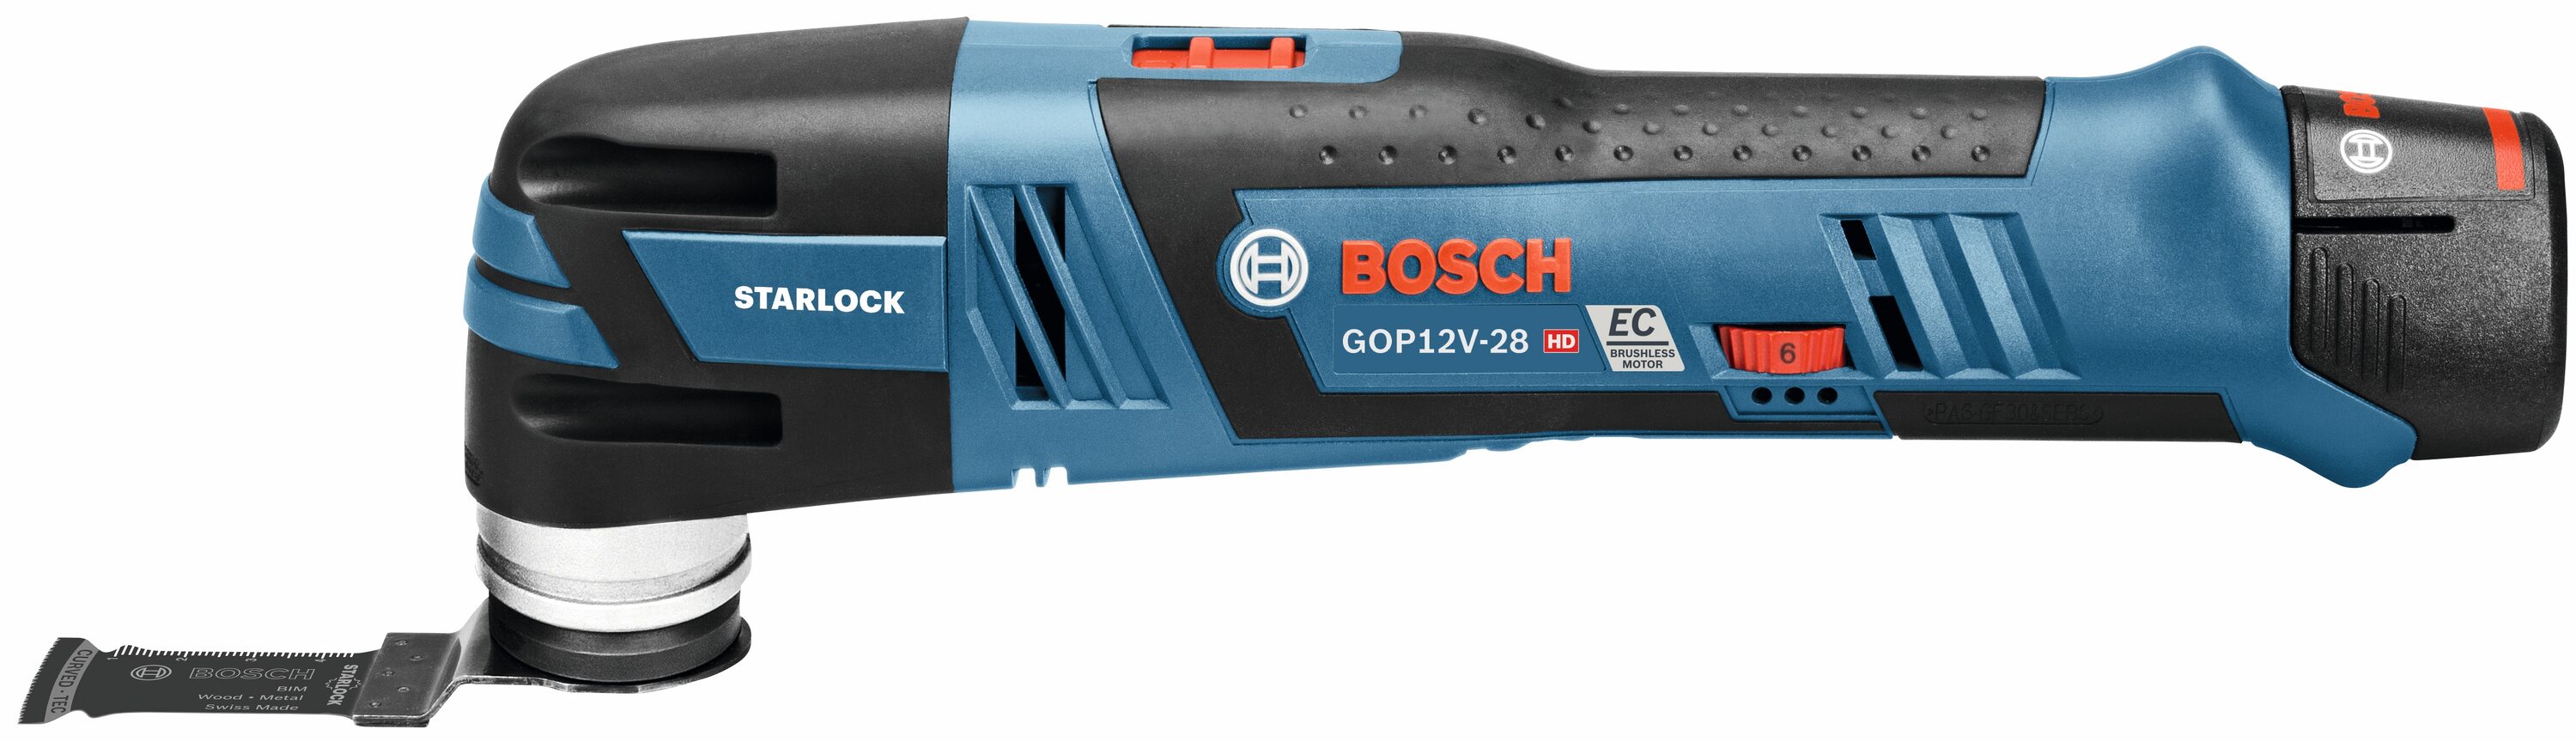 BOSCH GOP12V-28N 12V Max EC Brushless Starlock Oscillating Multi-Tool Bare  Tool